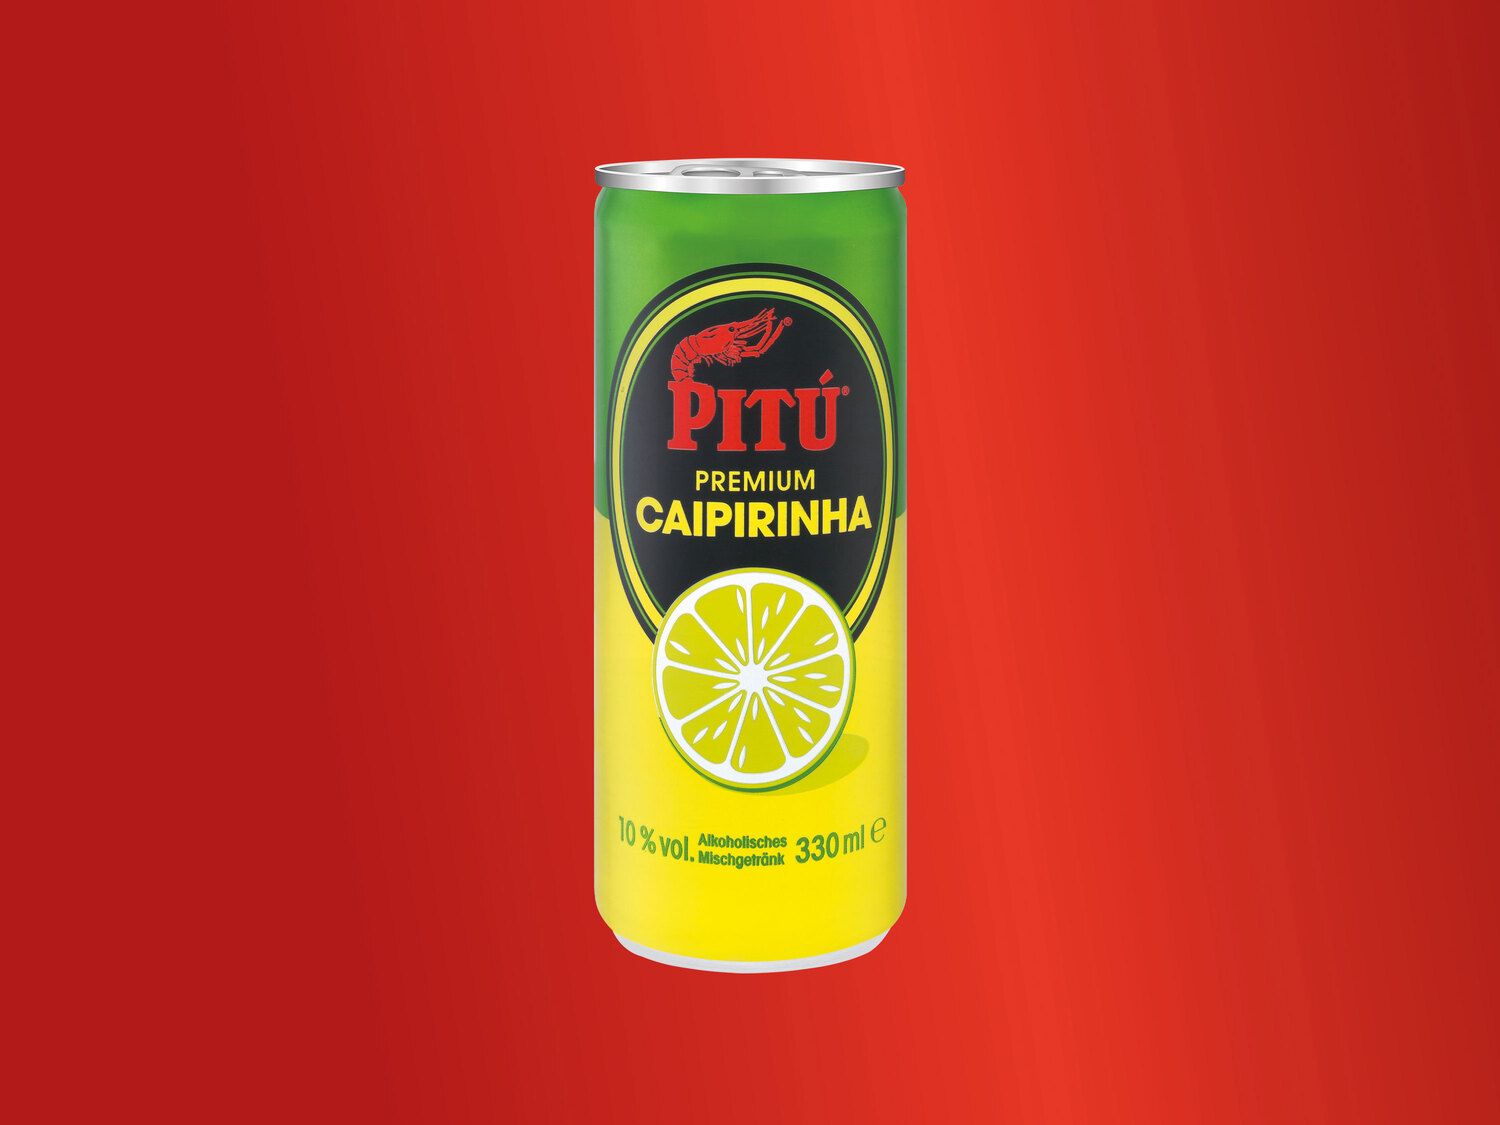 Pitú Premium Caipirinha - Lidl Deutschland